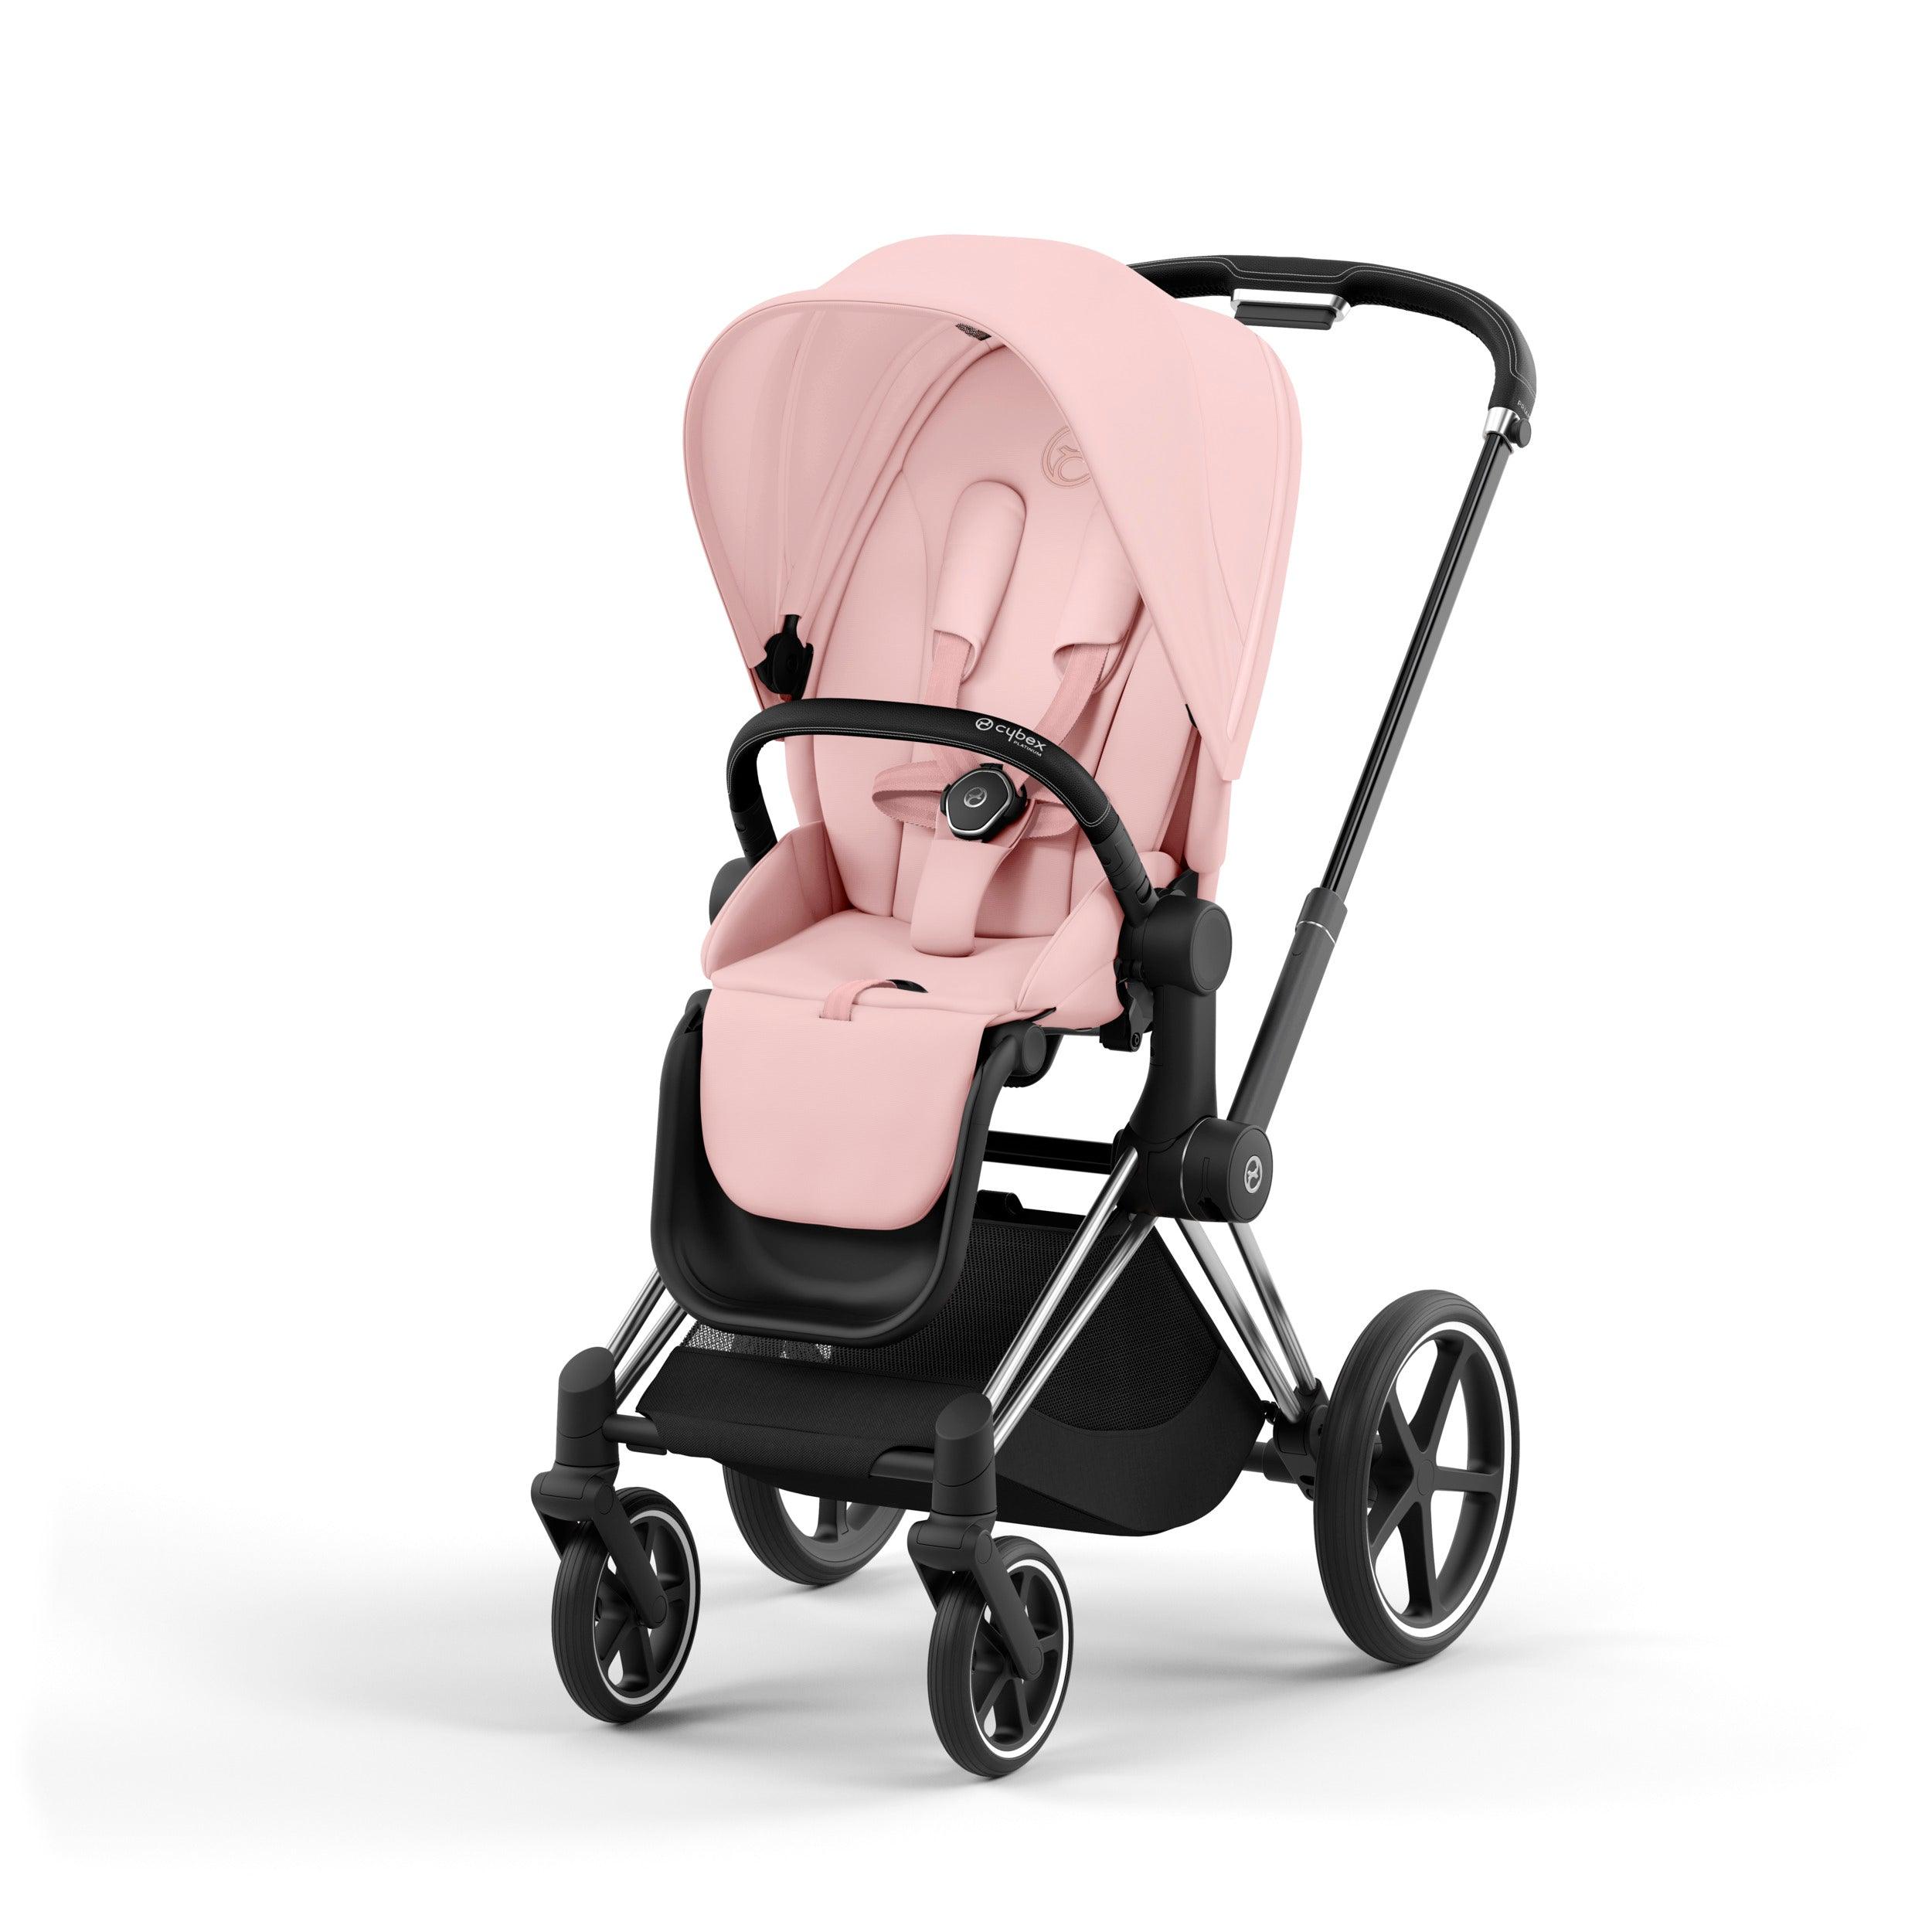 CYBEX Priam Baby Stroller in Peach Pink & Chrome Black frame